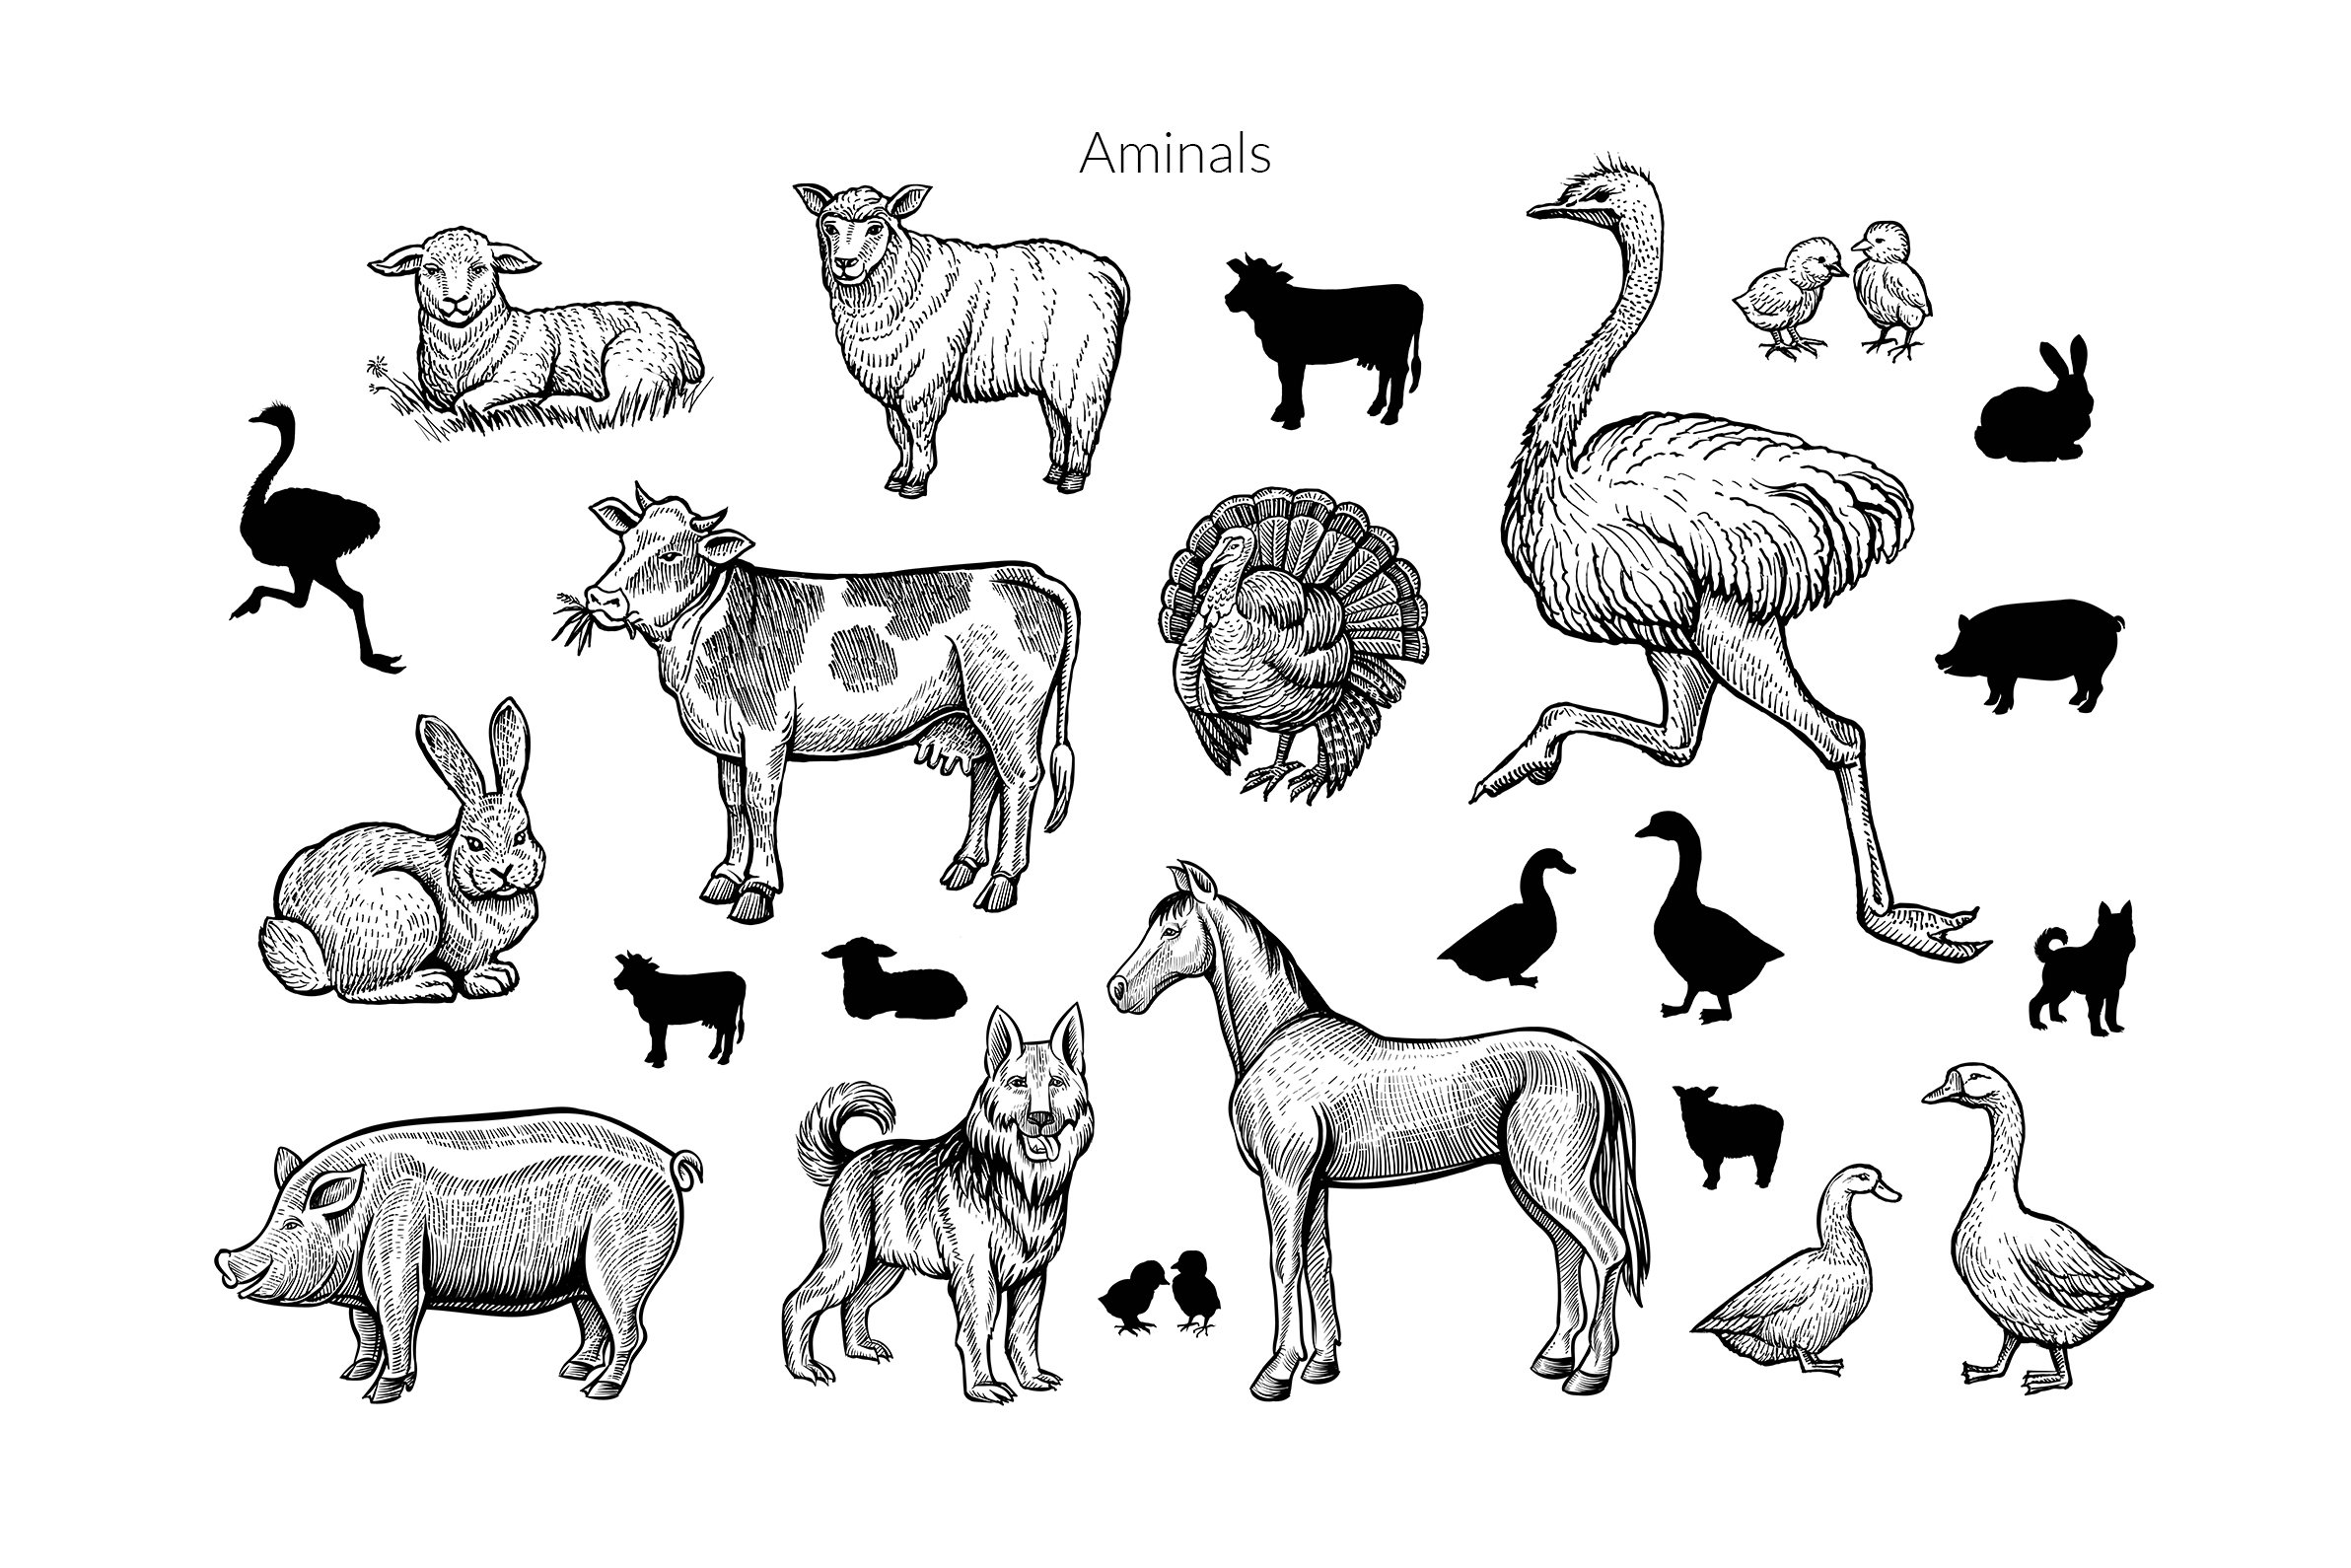 Graphic animals elements.